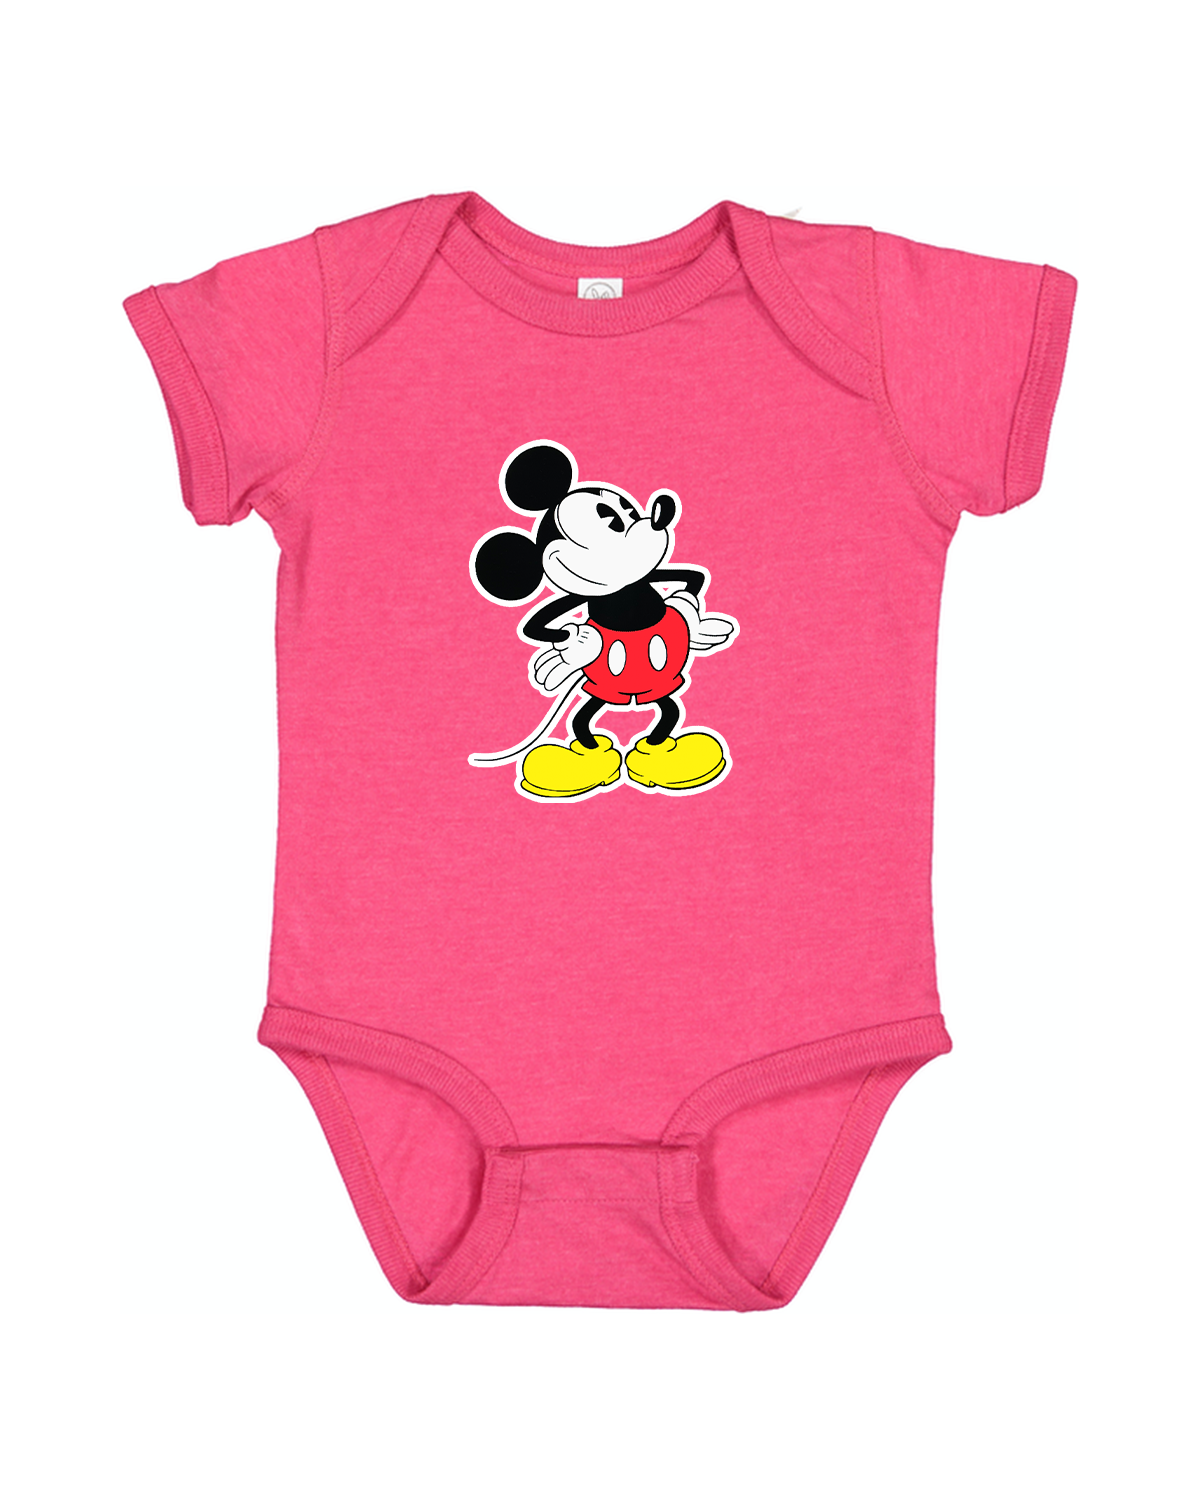 Mickey Mouse Cartoon Baby Romper Onesie